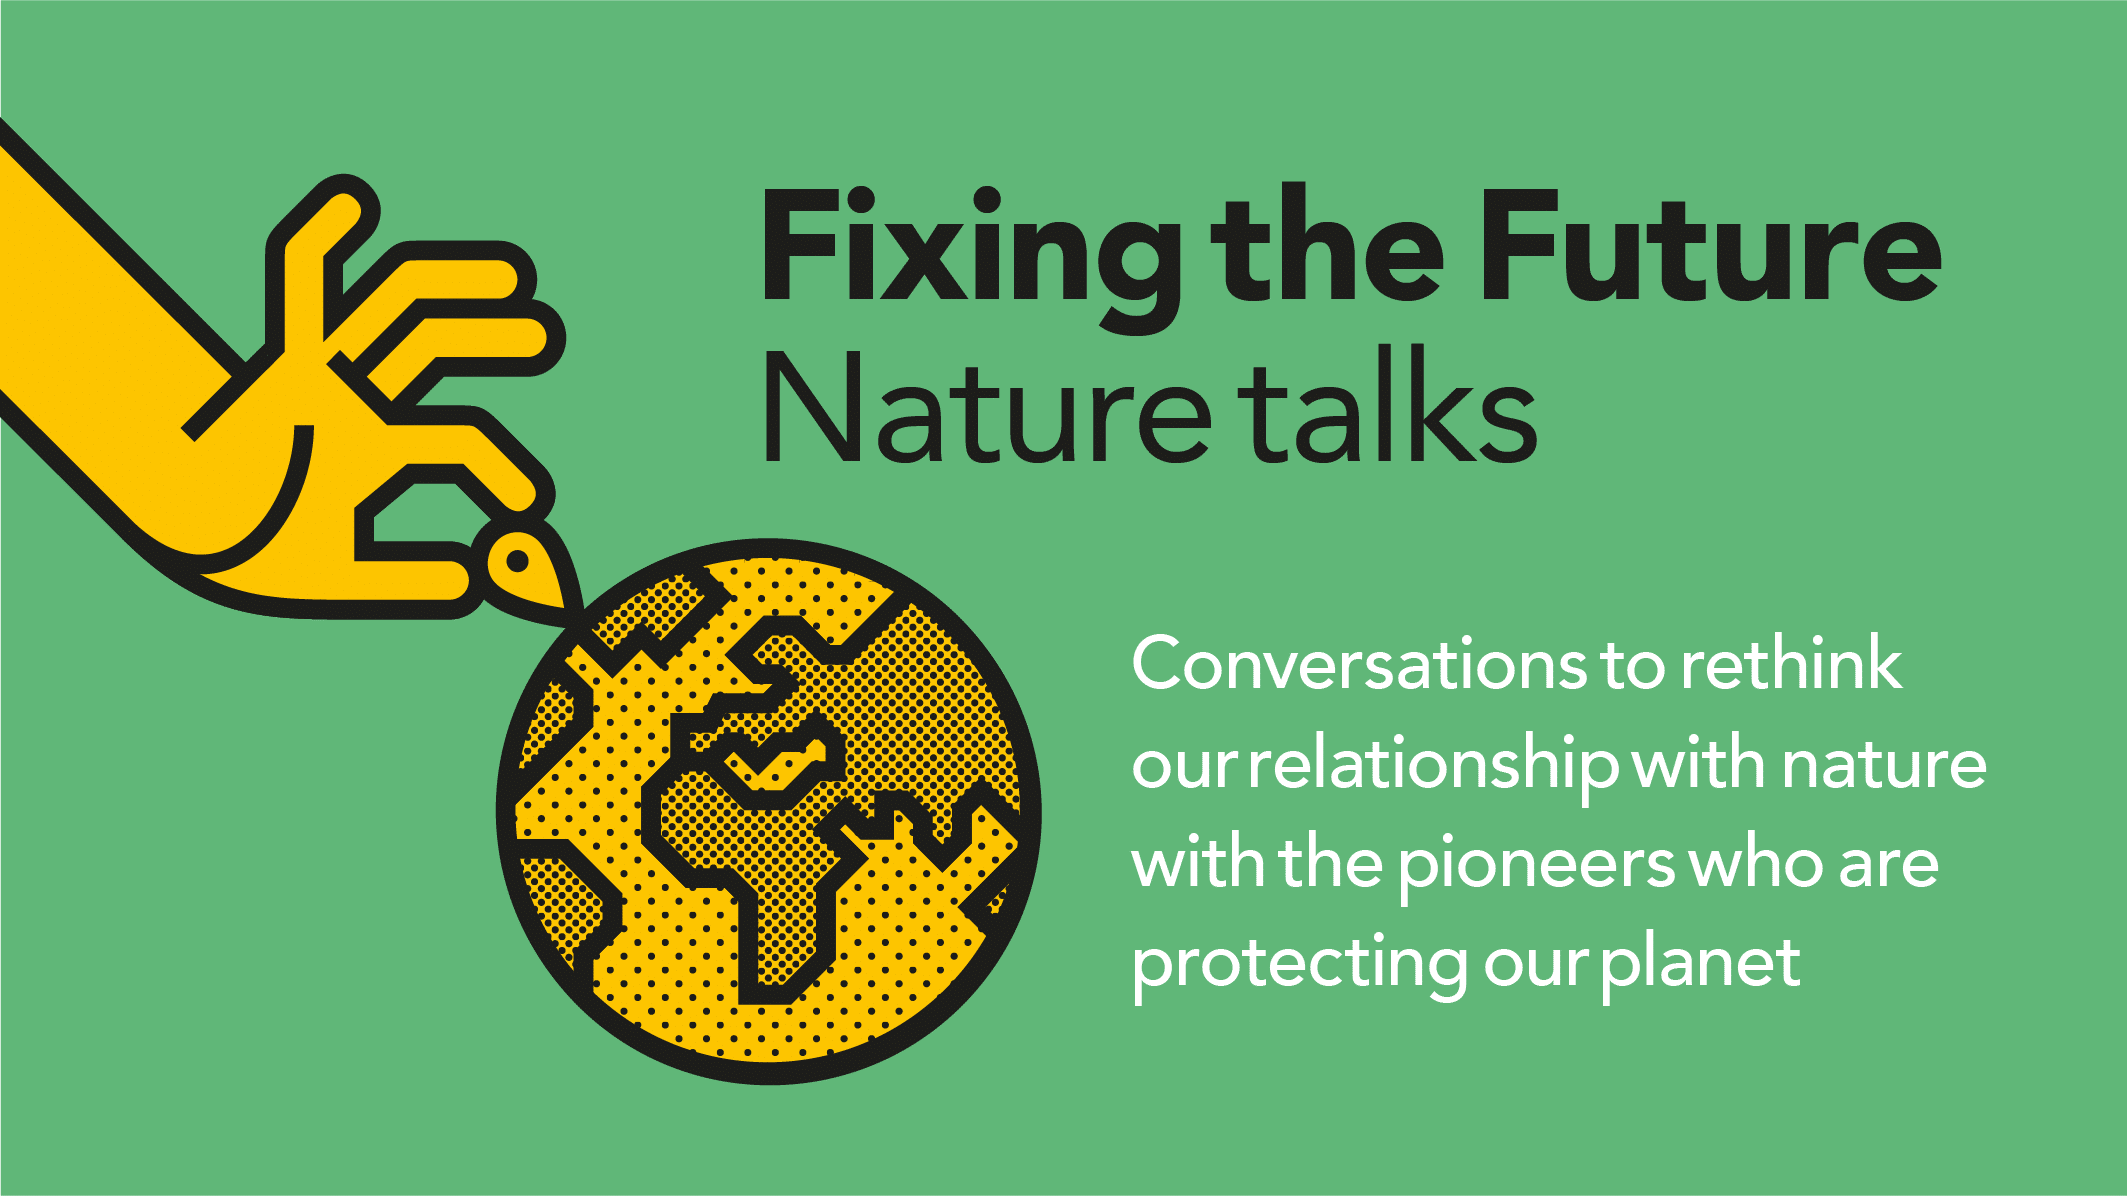 https://atlasofthefuture.org/wp-content/uploads/2021/07/Fixing-the-Future-Nature-Talks.png